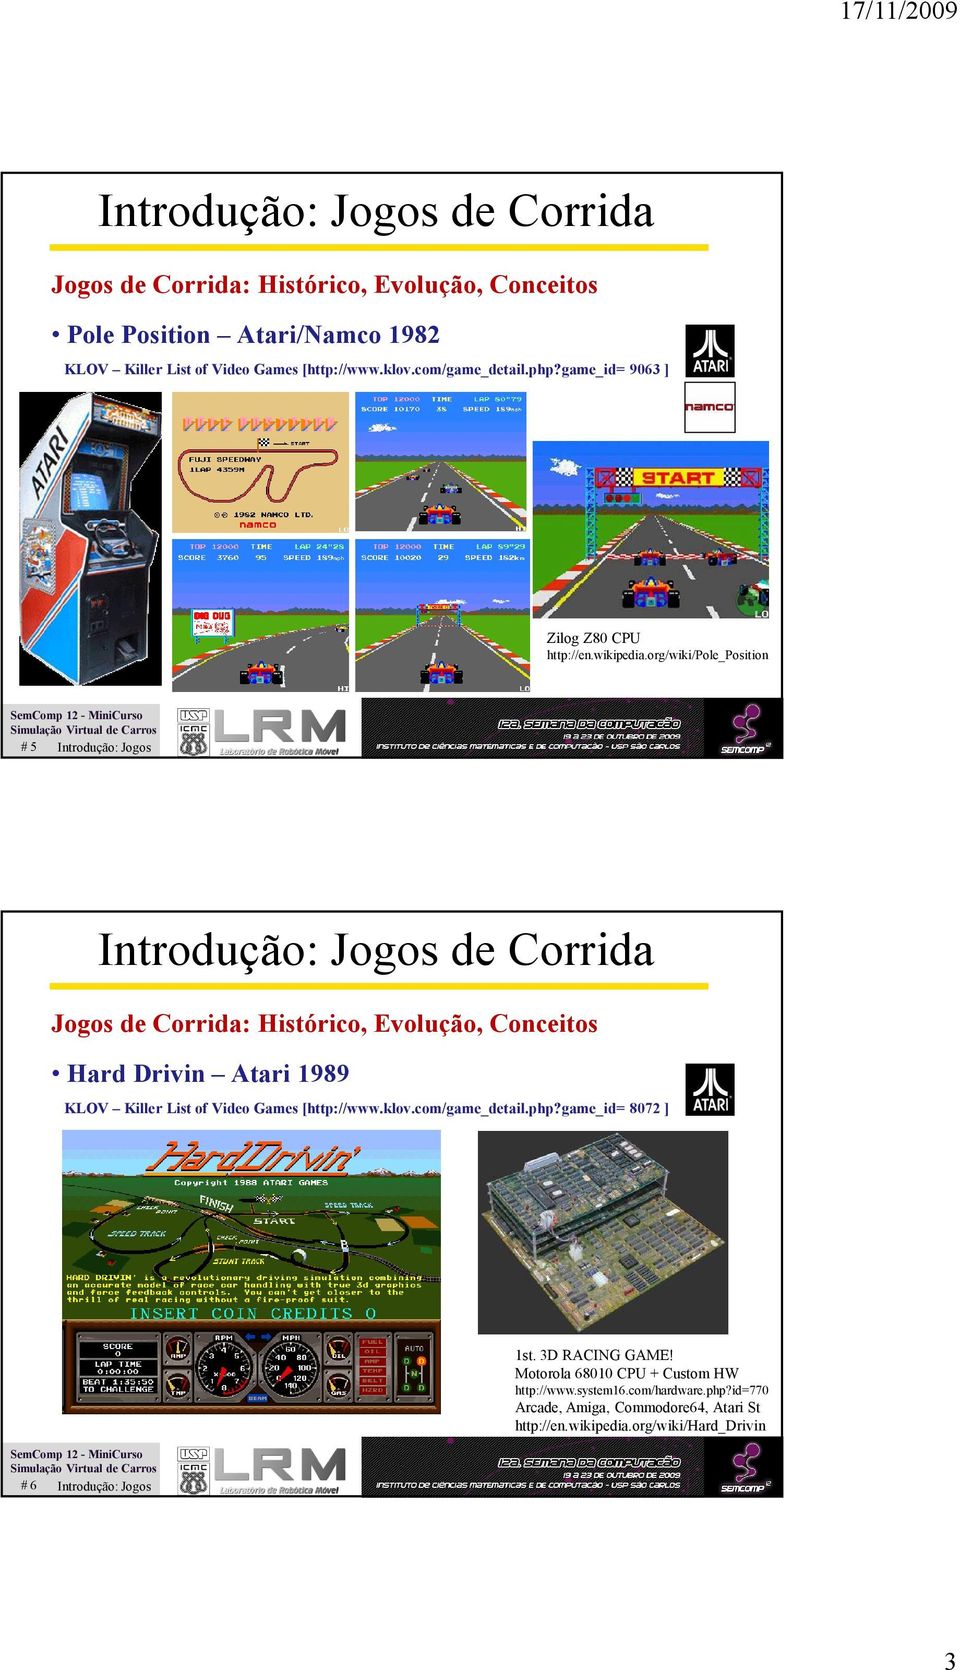 org/wiki/pole_position # 5 Introdução: Jogos Introdução: Jogos de Corrida Jogos de Corrida: Histórico, Evolução, Conceitos Hard Drivin Atari 1989 KLOV Killer List